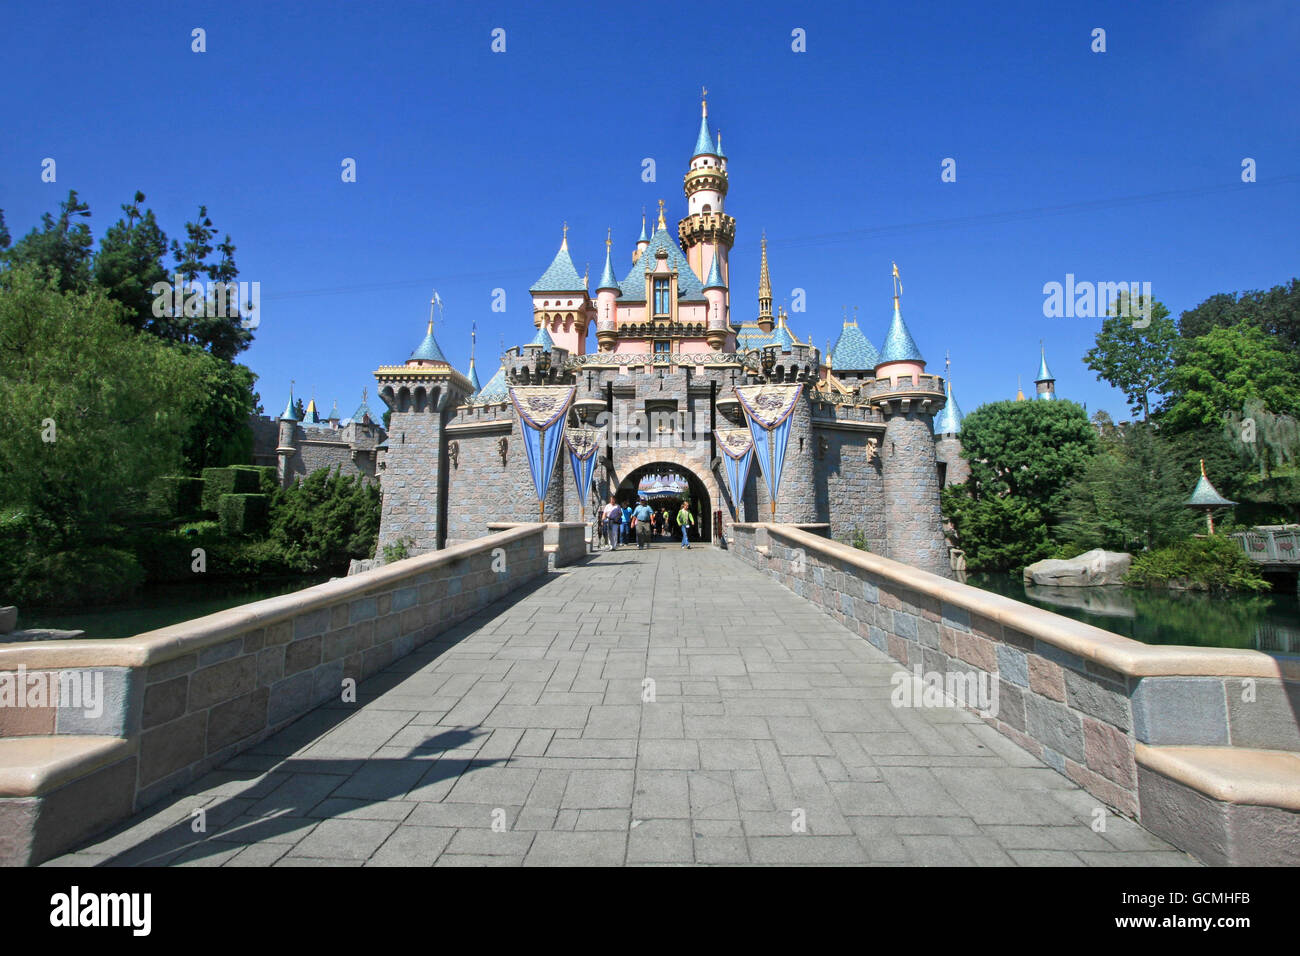 Anaheim, California, EE.UU. 16 de septiembre de 2009. El Disneyland California Sleeping Beauty Castle. Lucy Clark/Alamy Live News Foto de stock